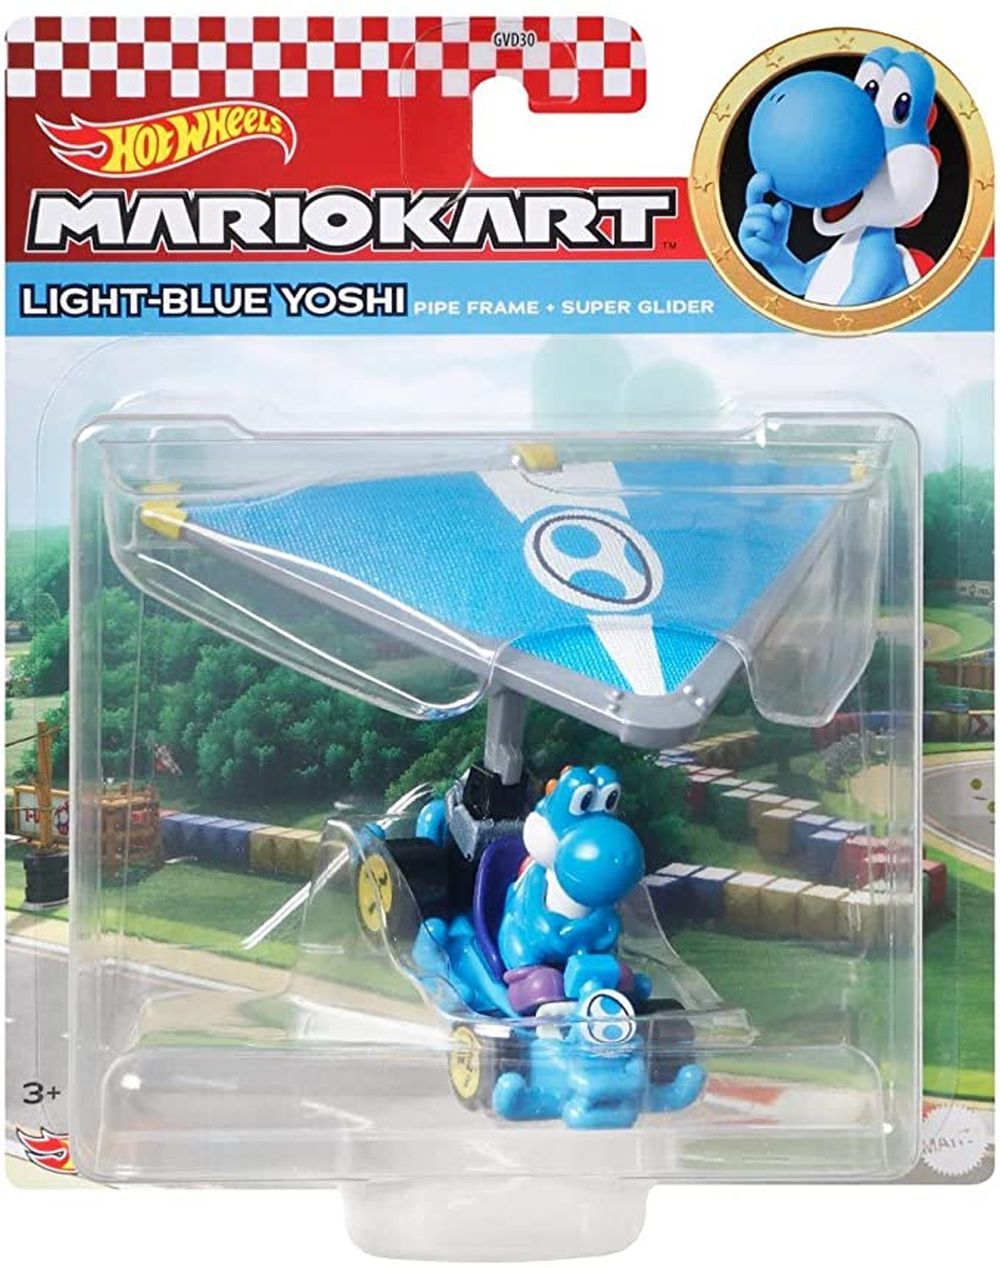 MATTEL Light-blue Yoshi Mariokart Super Glider - 